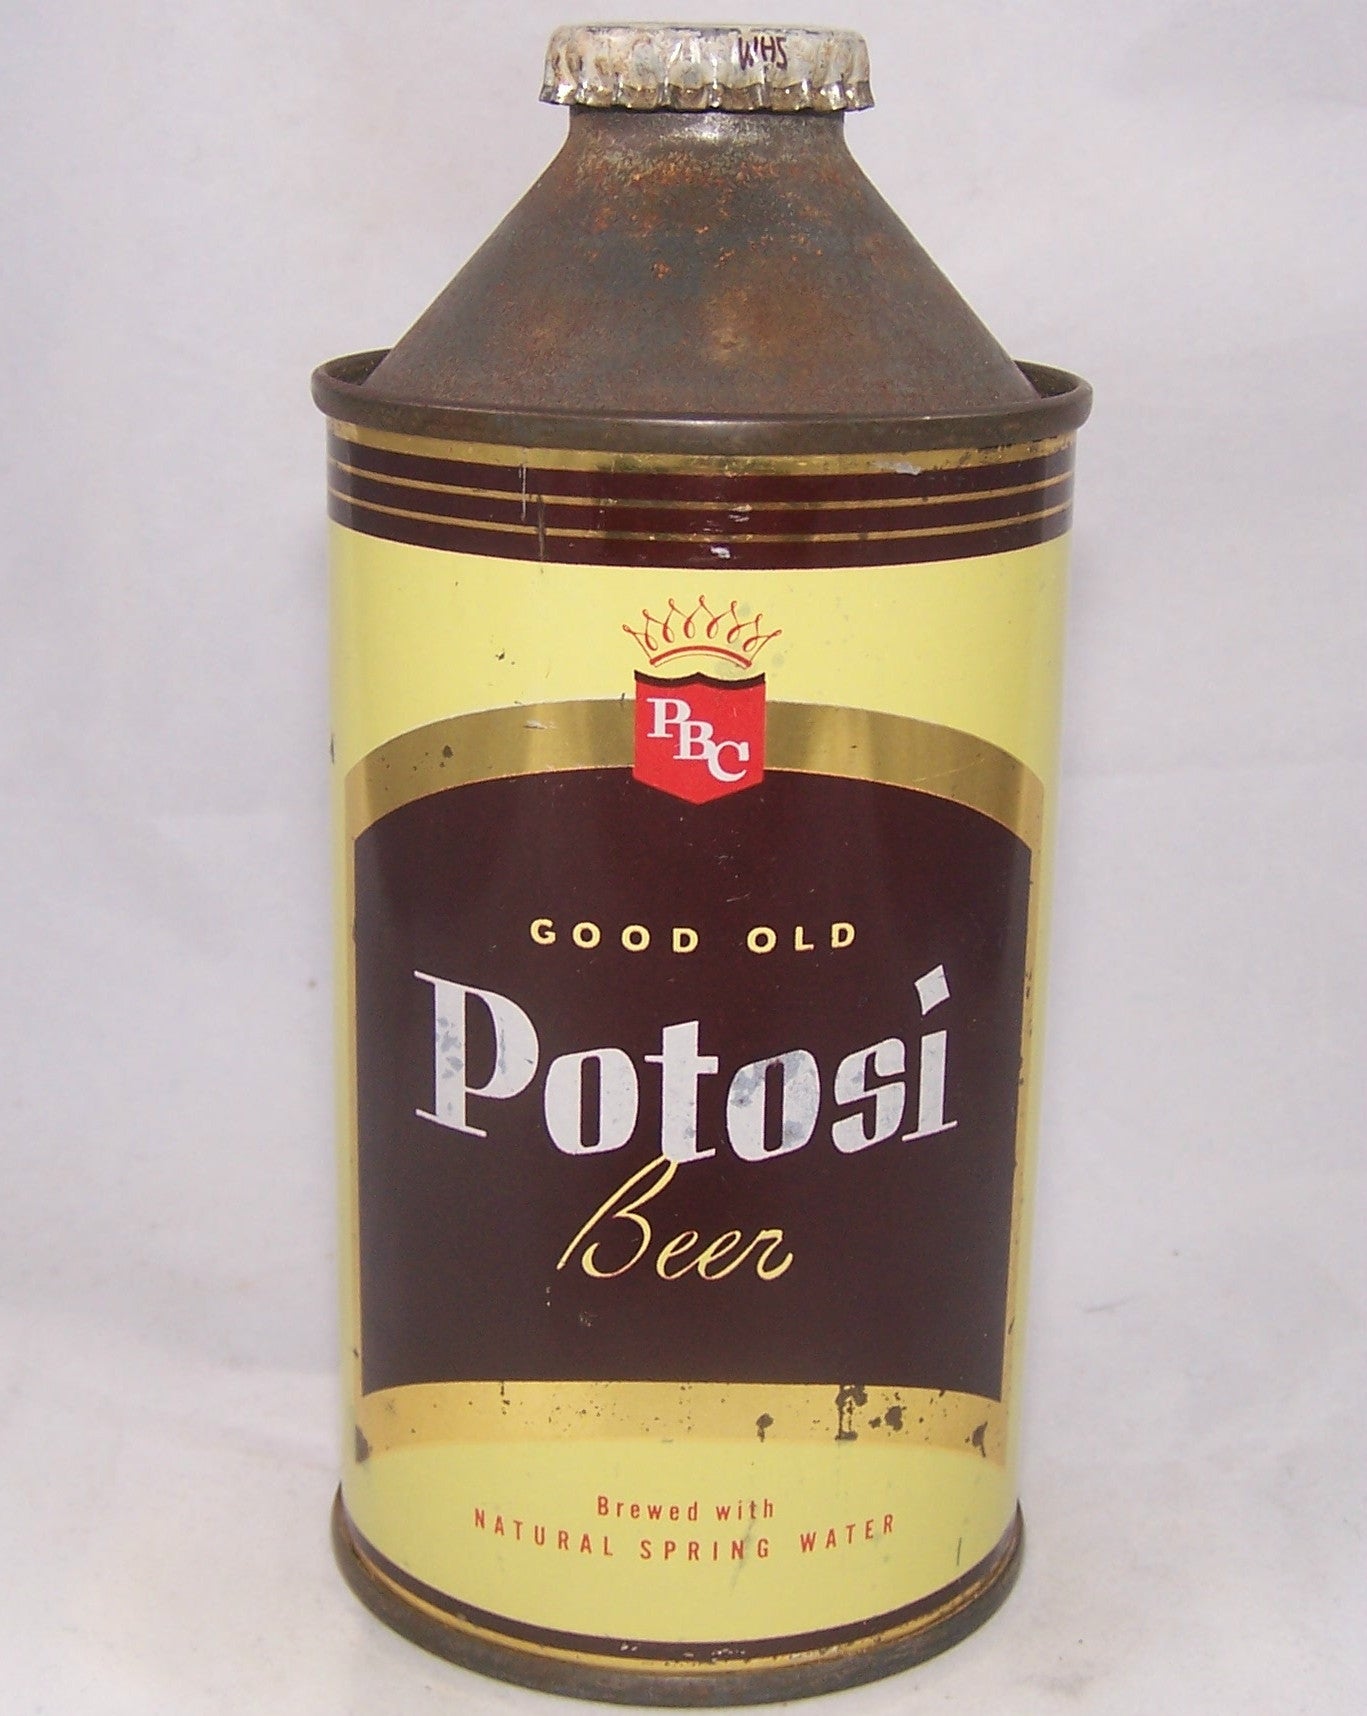 Good Old Potosi Beer, USBC 179-25, Grade 1/1-